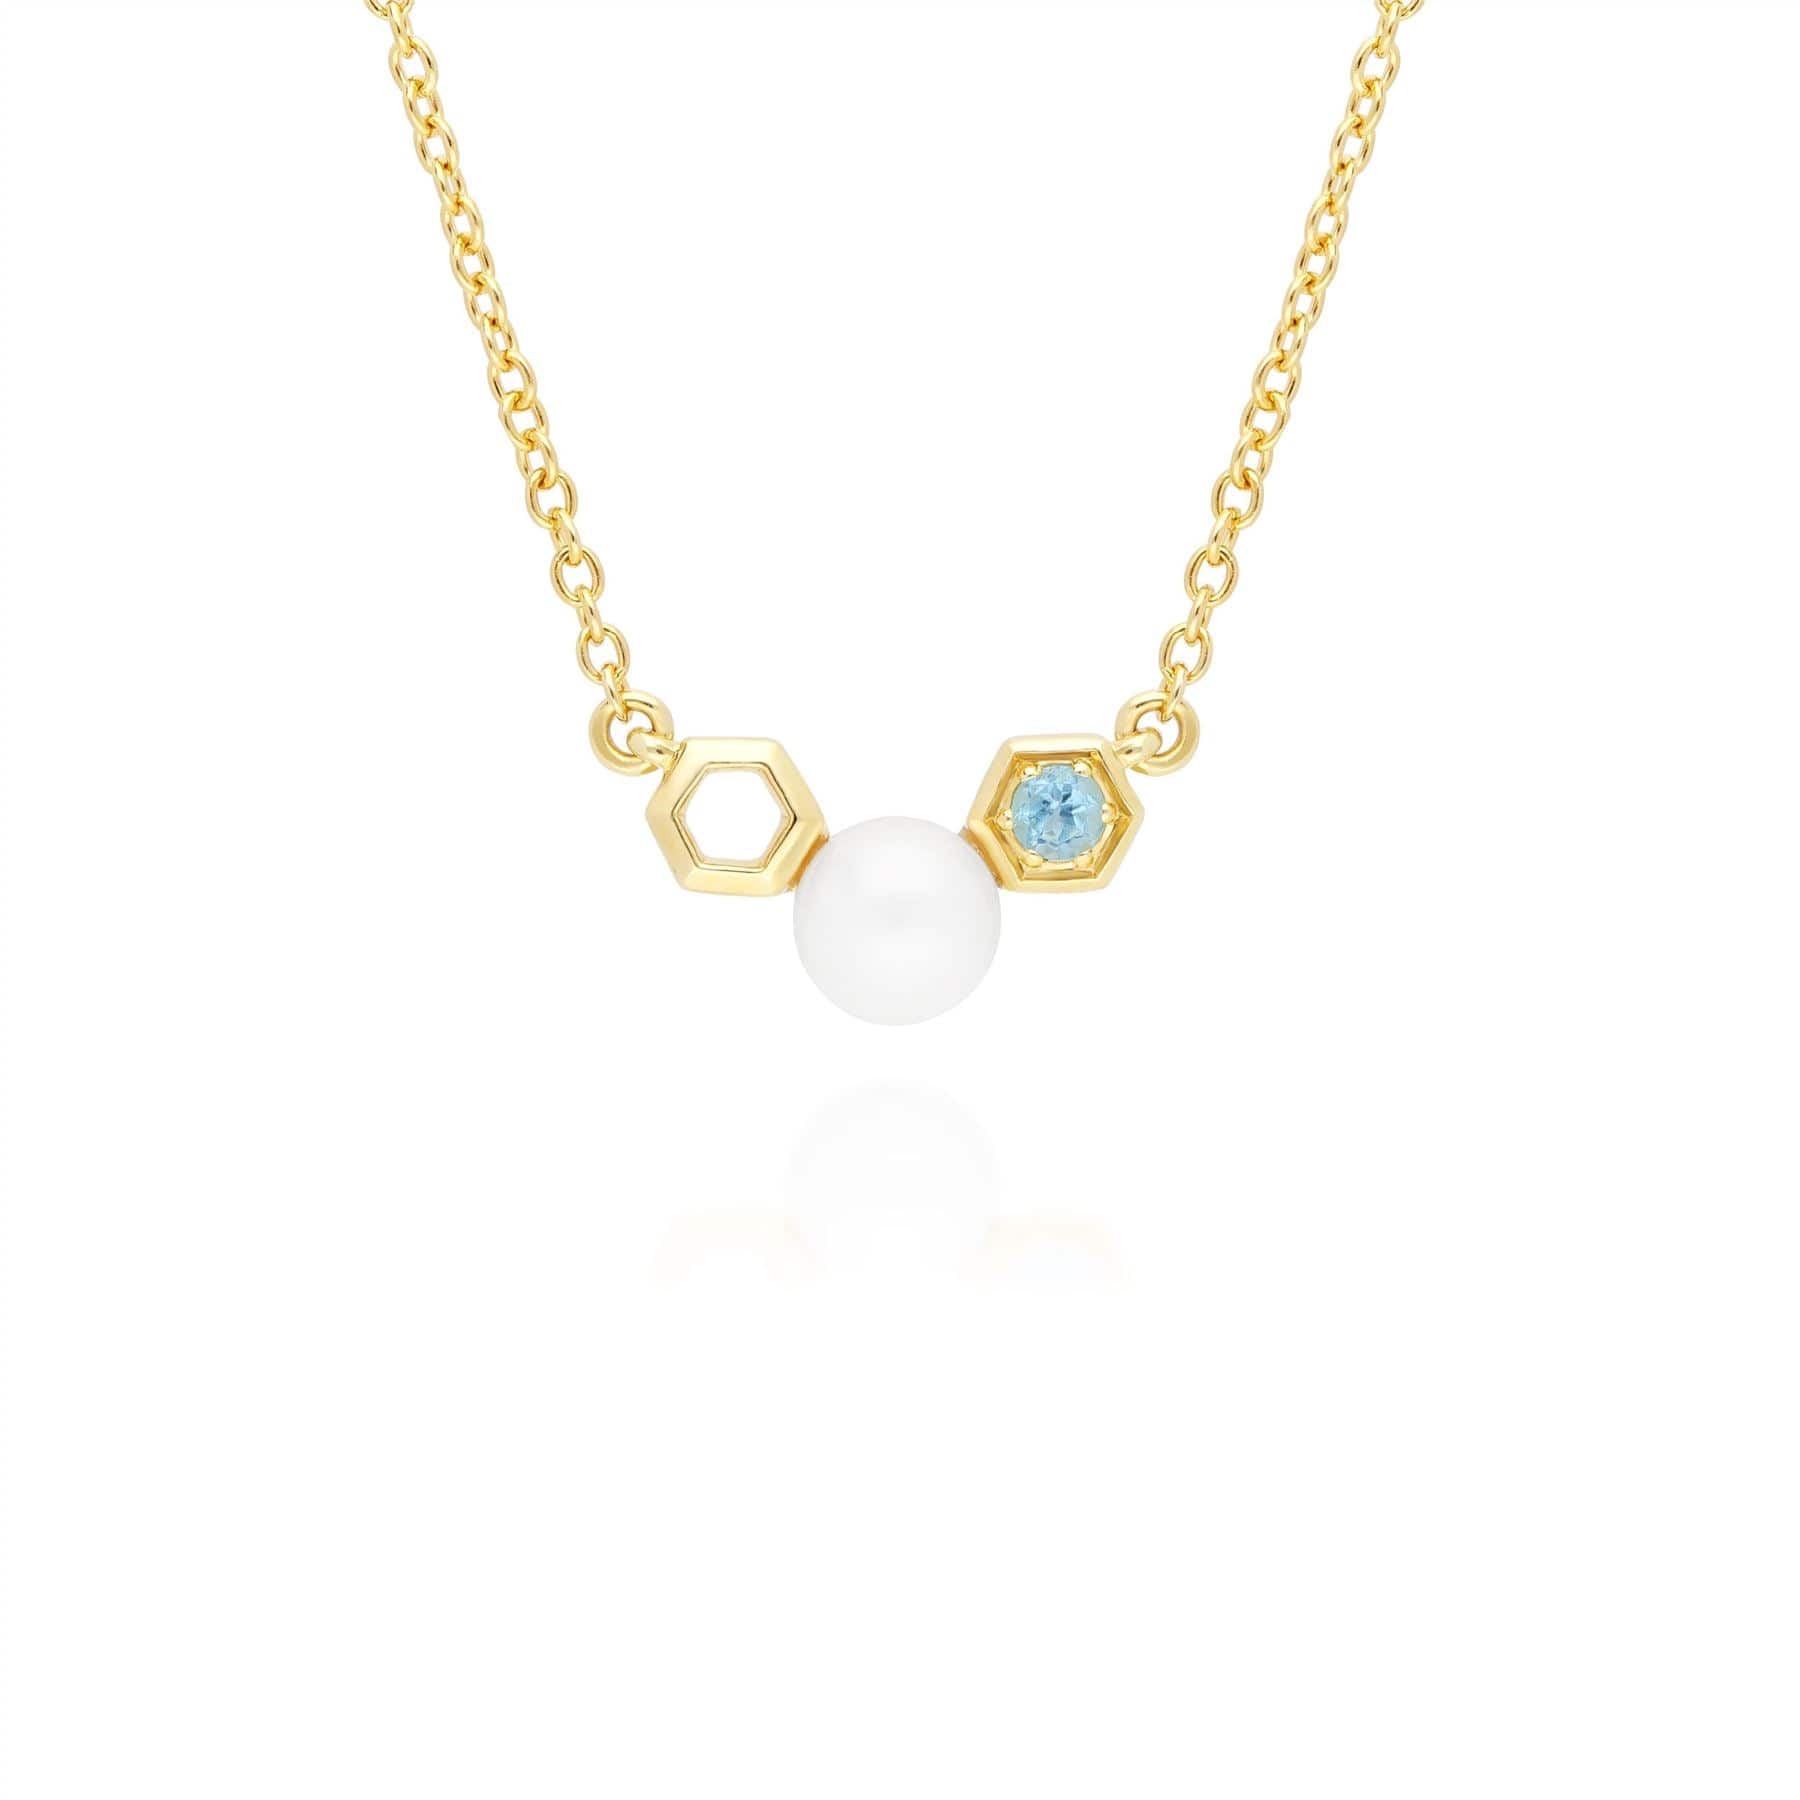 Modern Pearl & Blue Topaz Necklace in 9ct Yellow Gold - Gemondo